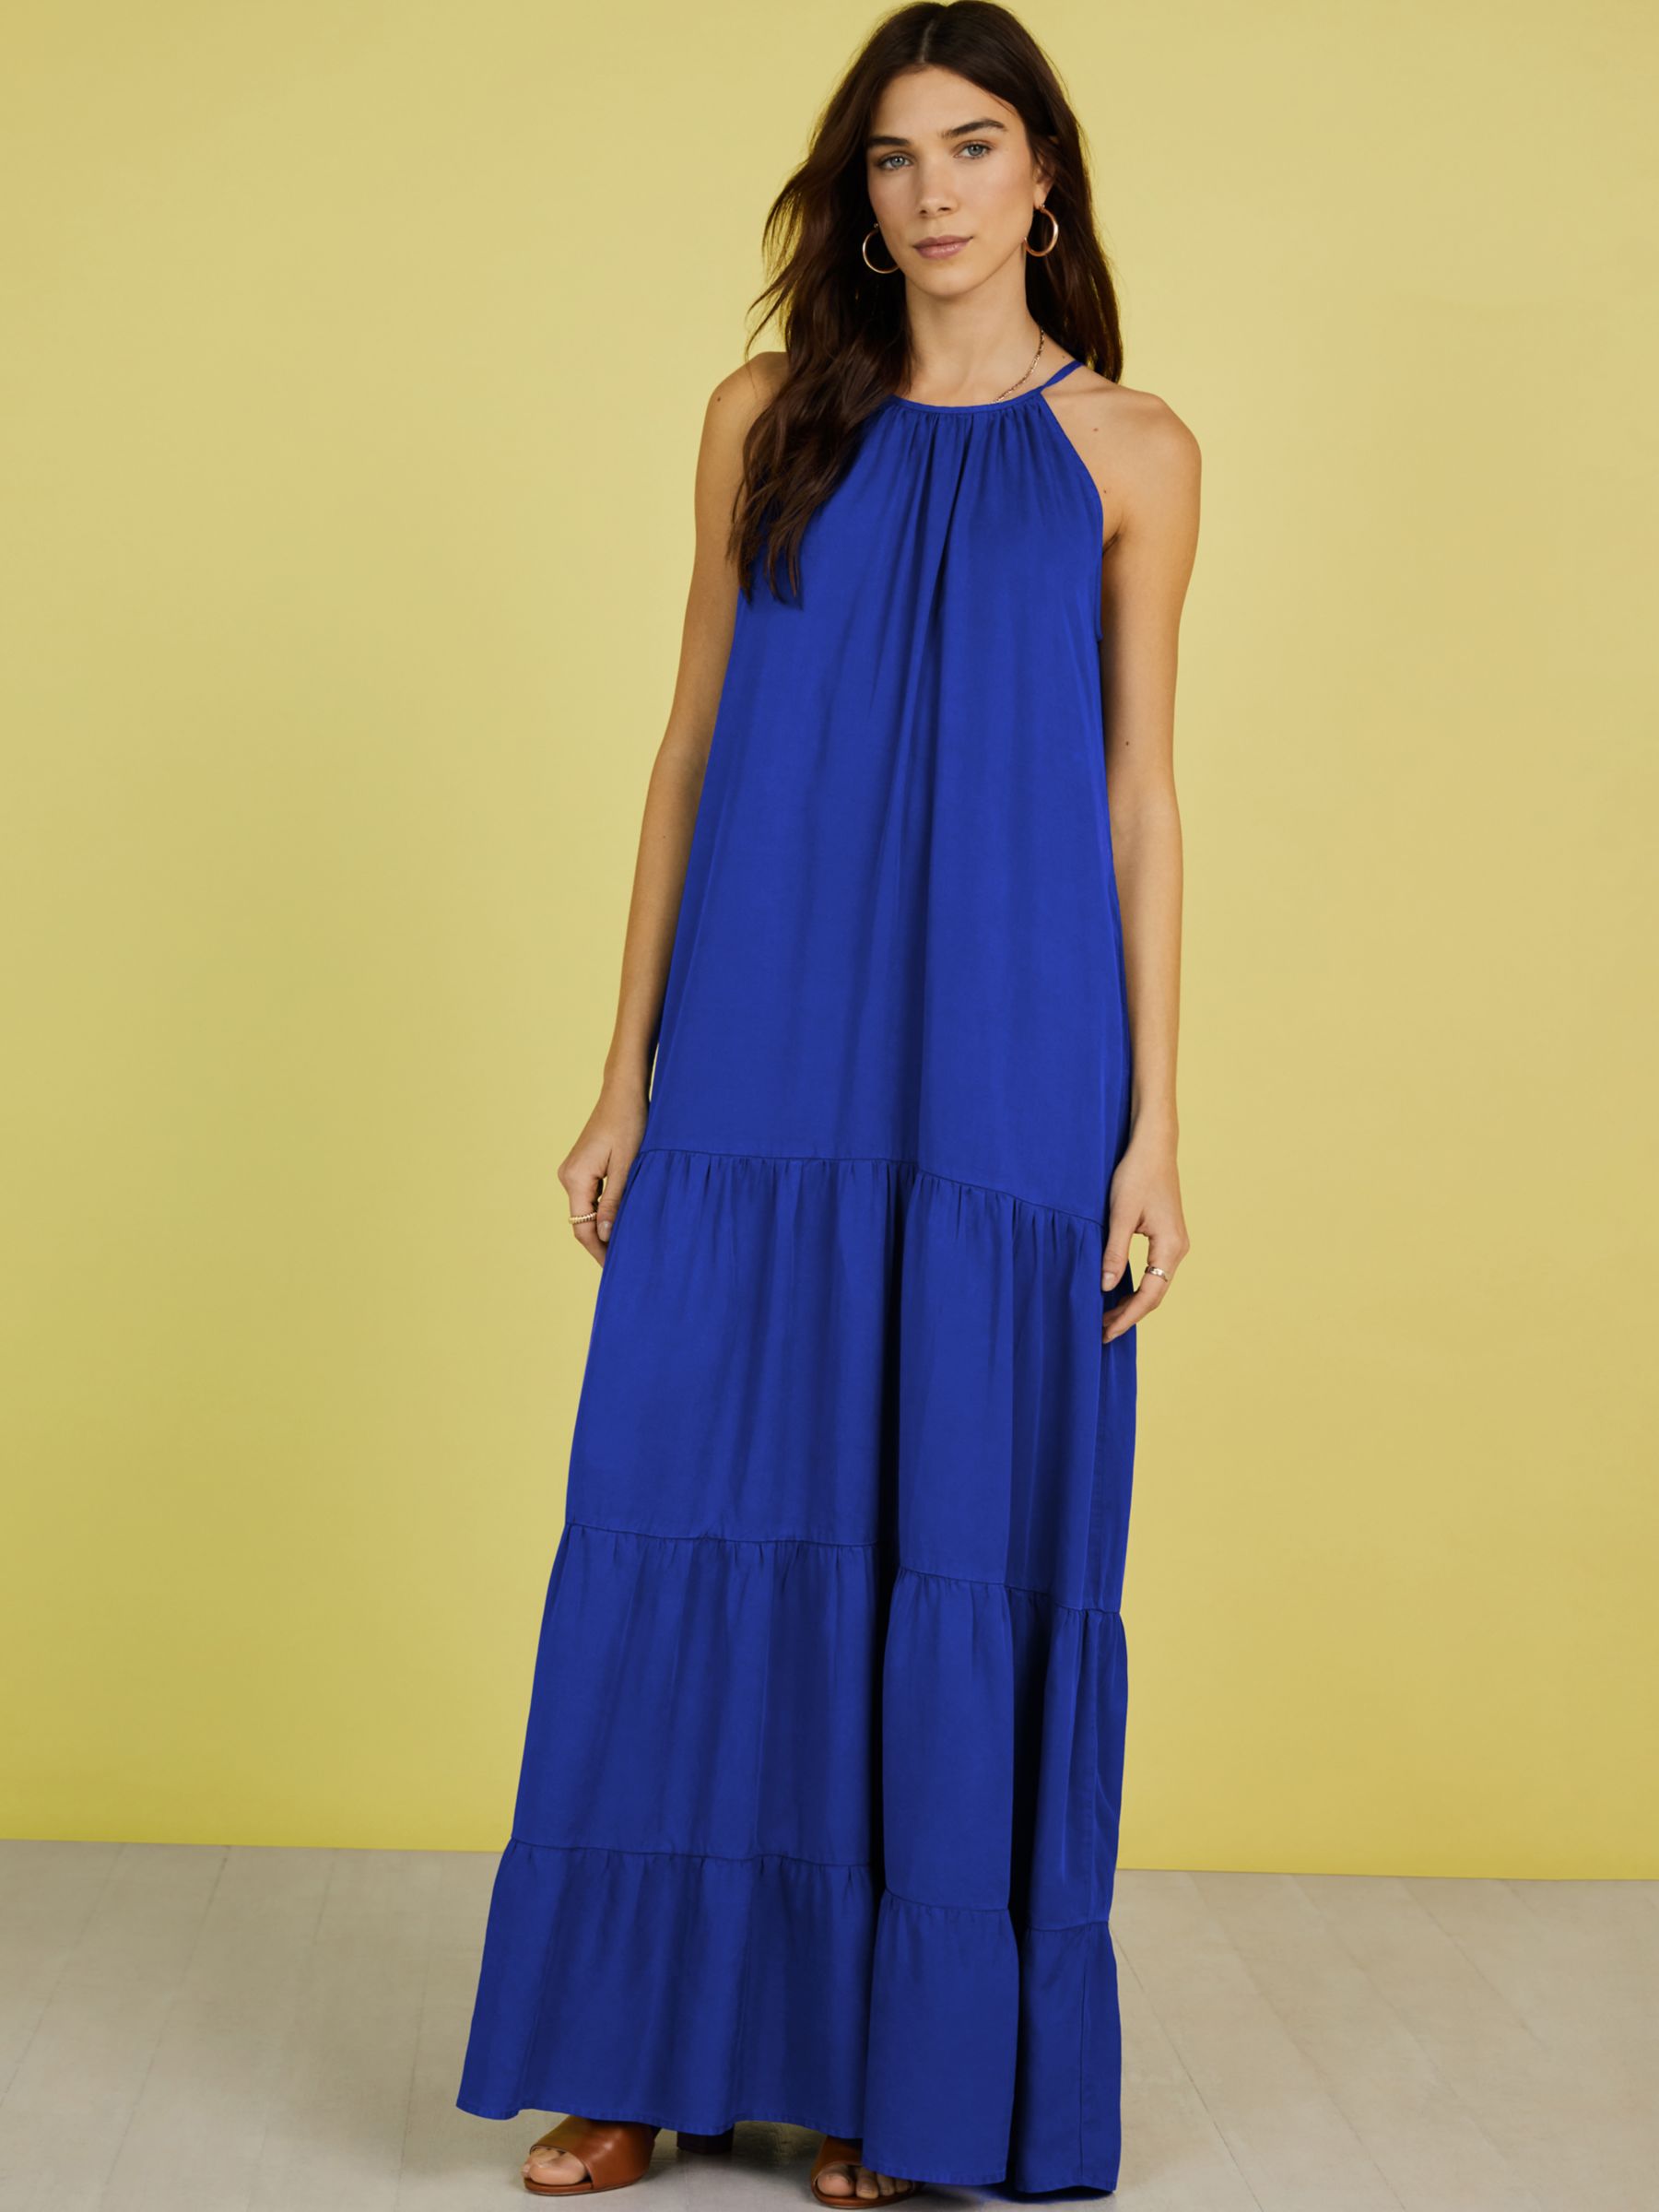 Baukjen Everly Sleeveless Tiered Maxi Dress, Royal Blue, 16